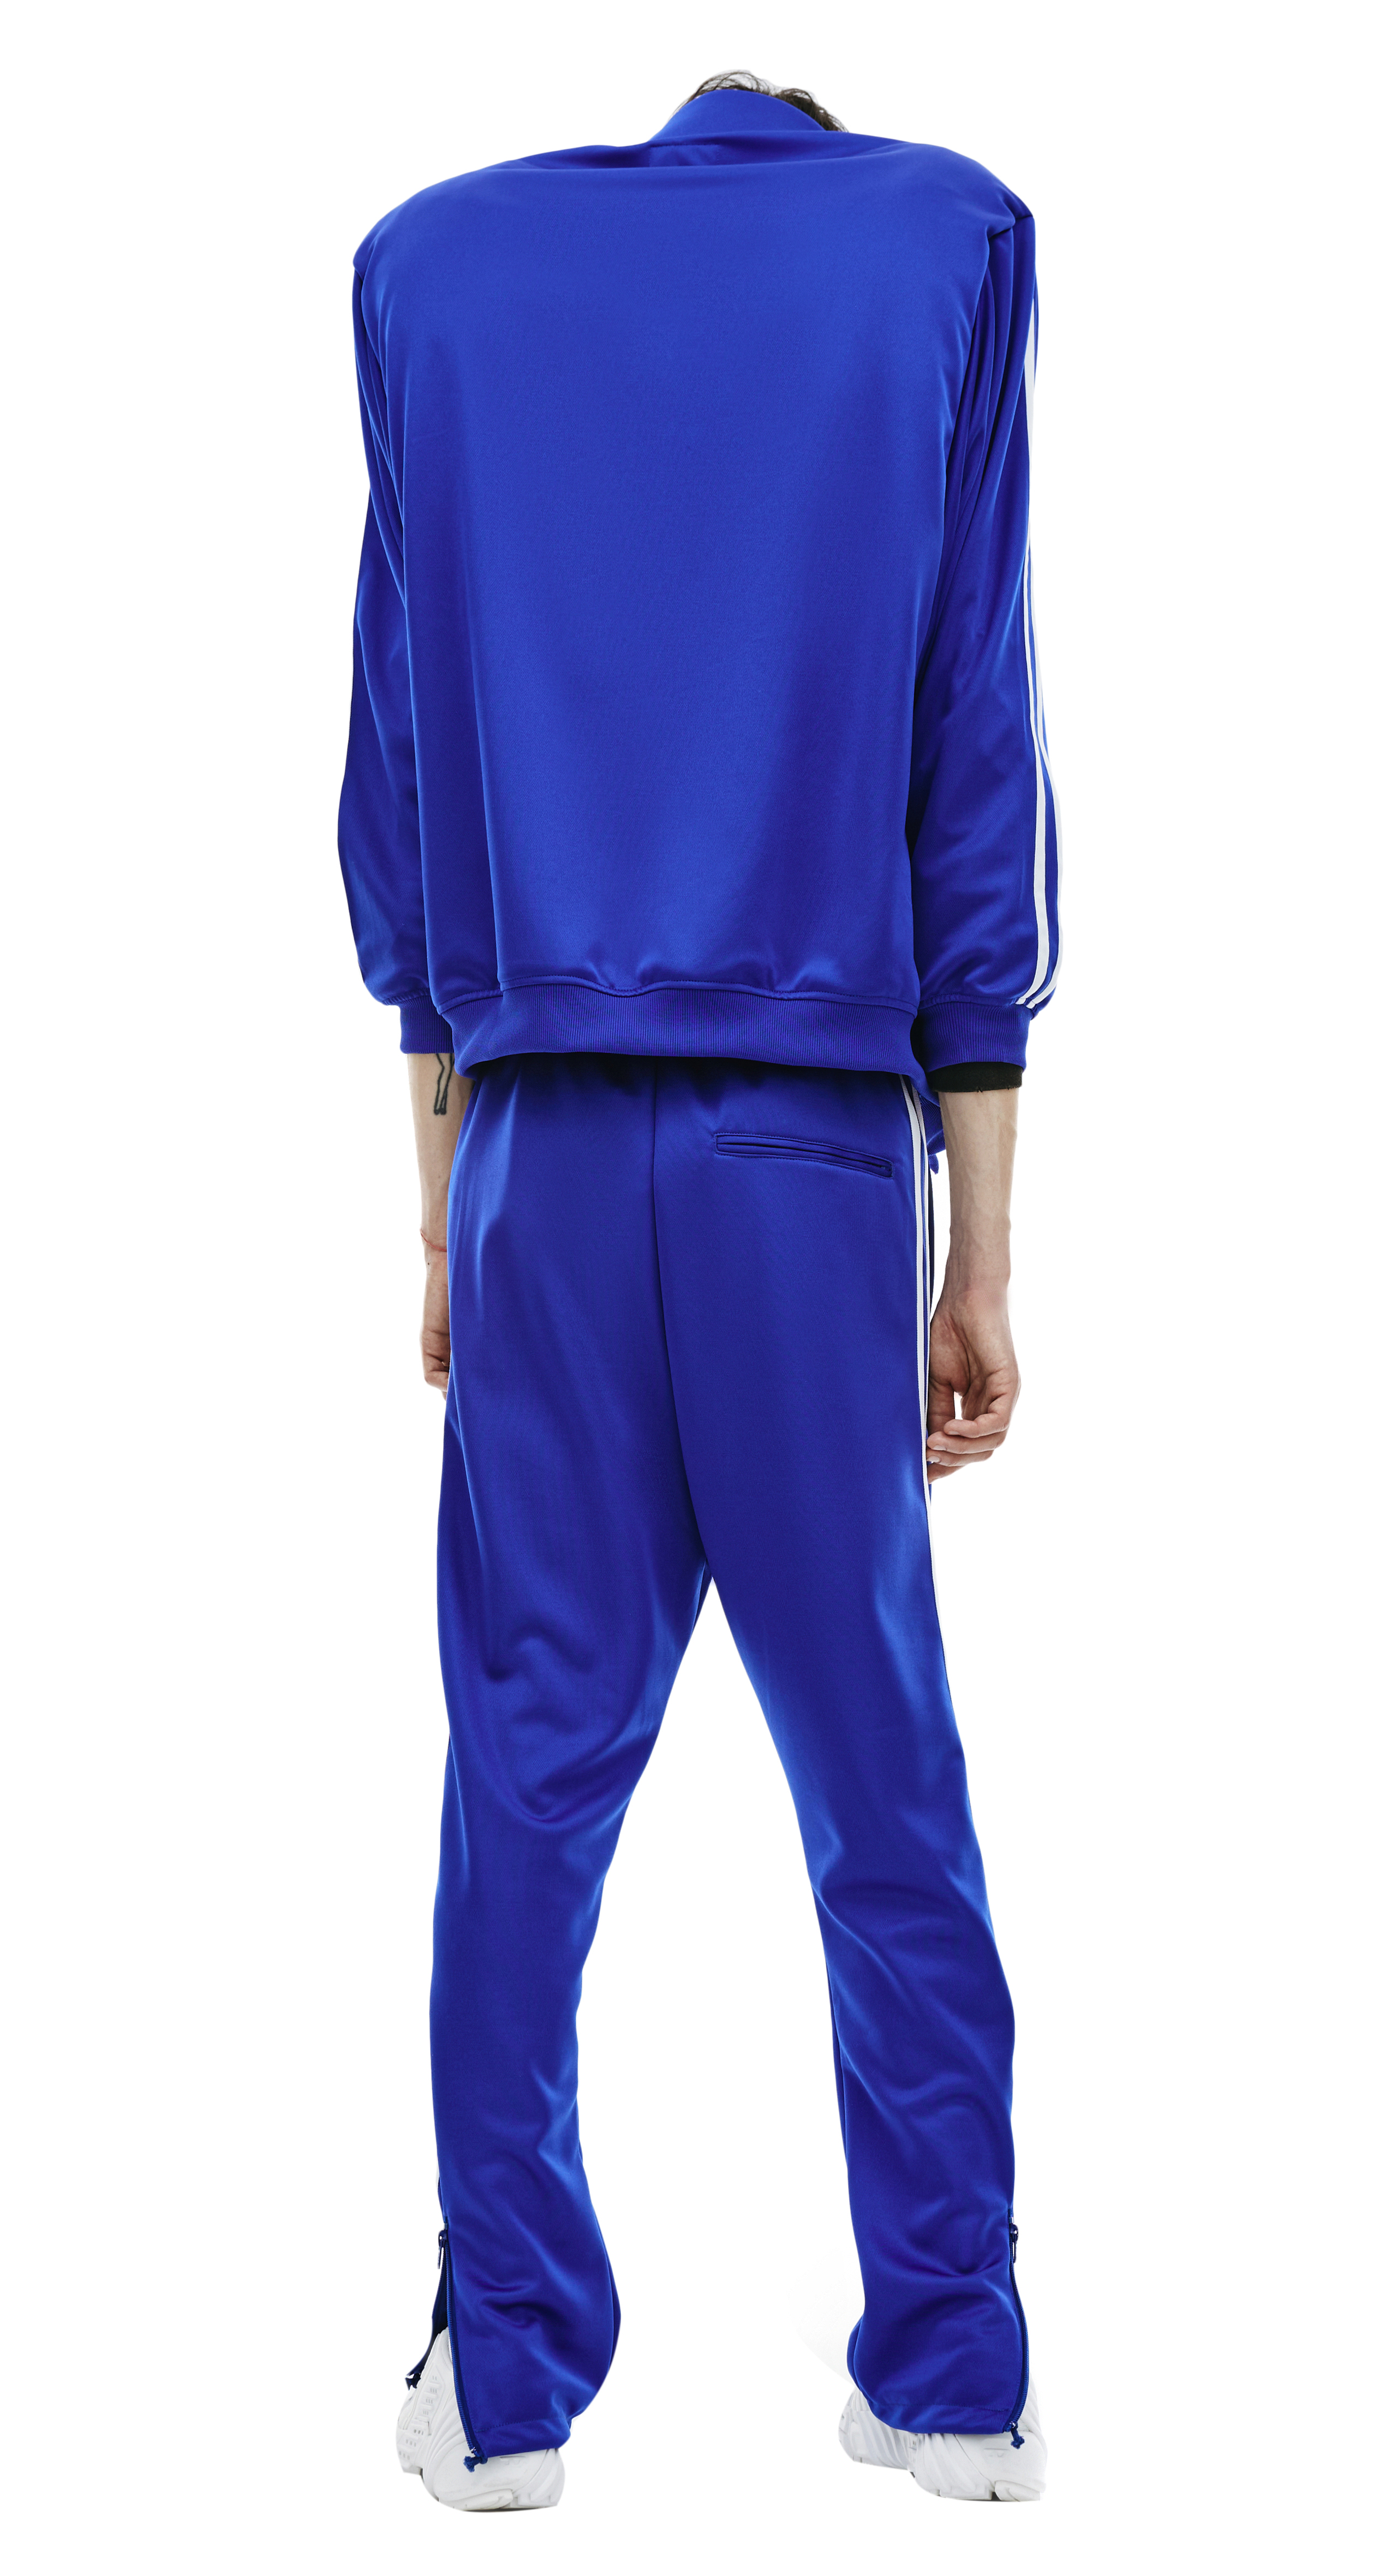 Buy Doublet men blue invisible track jacket for $510 online on